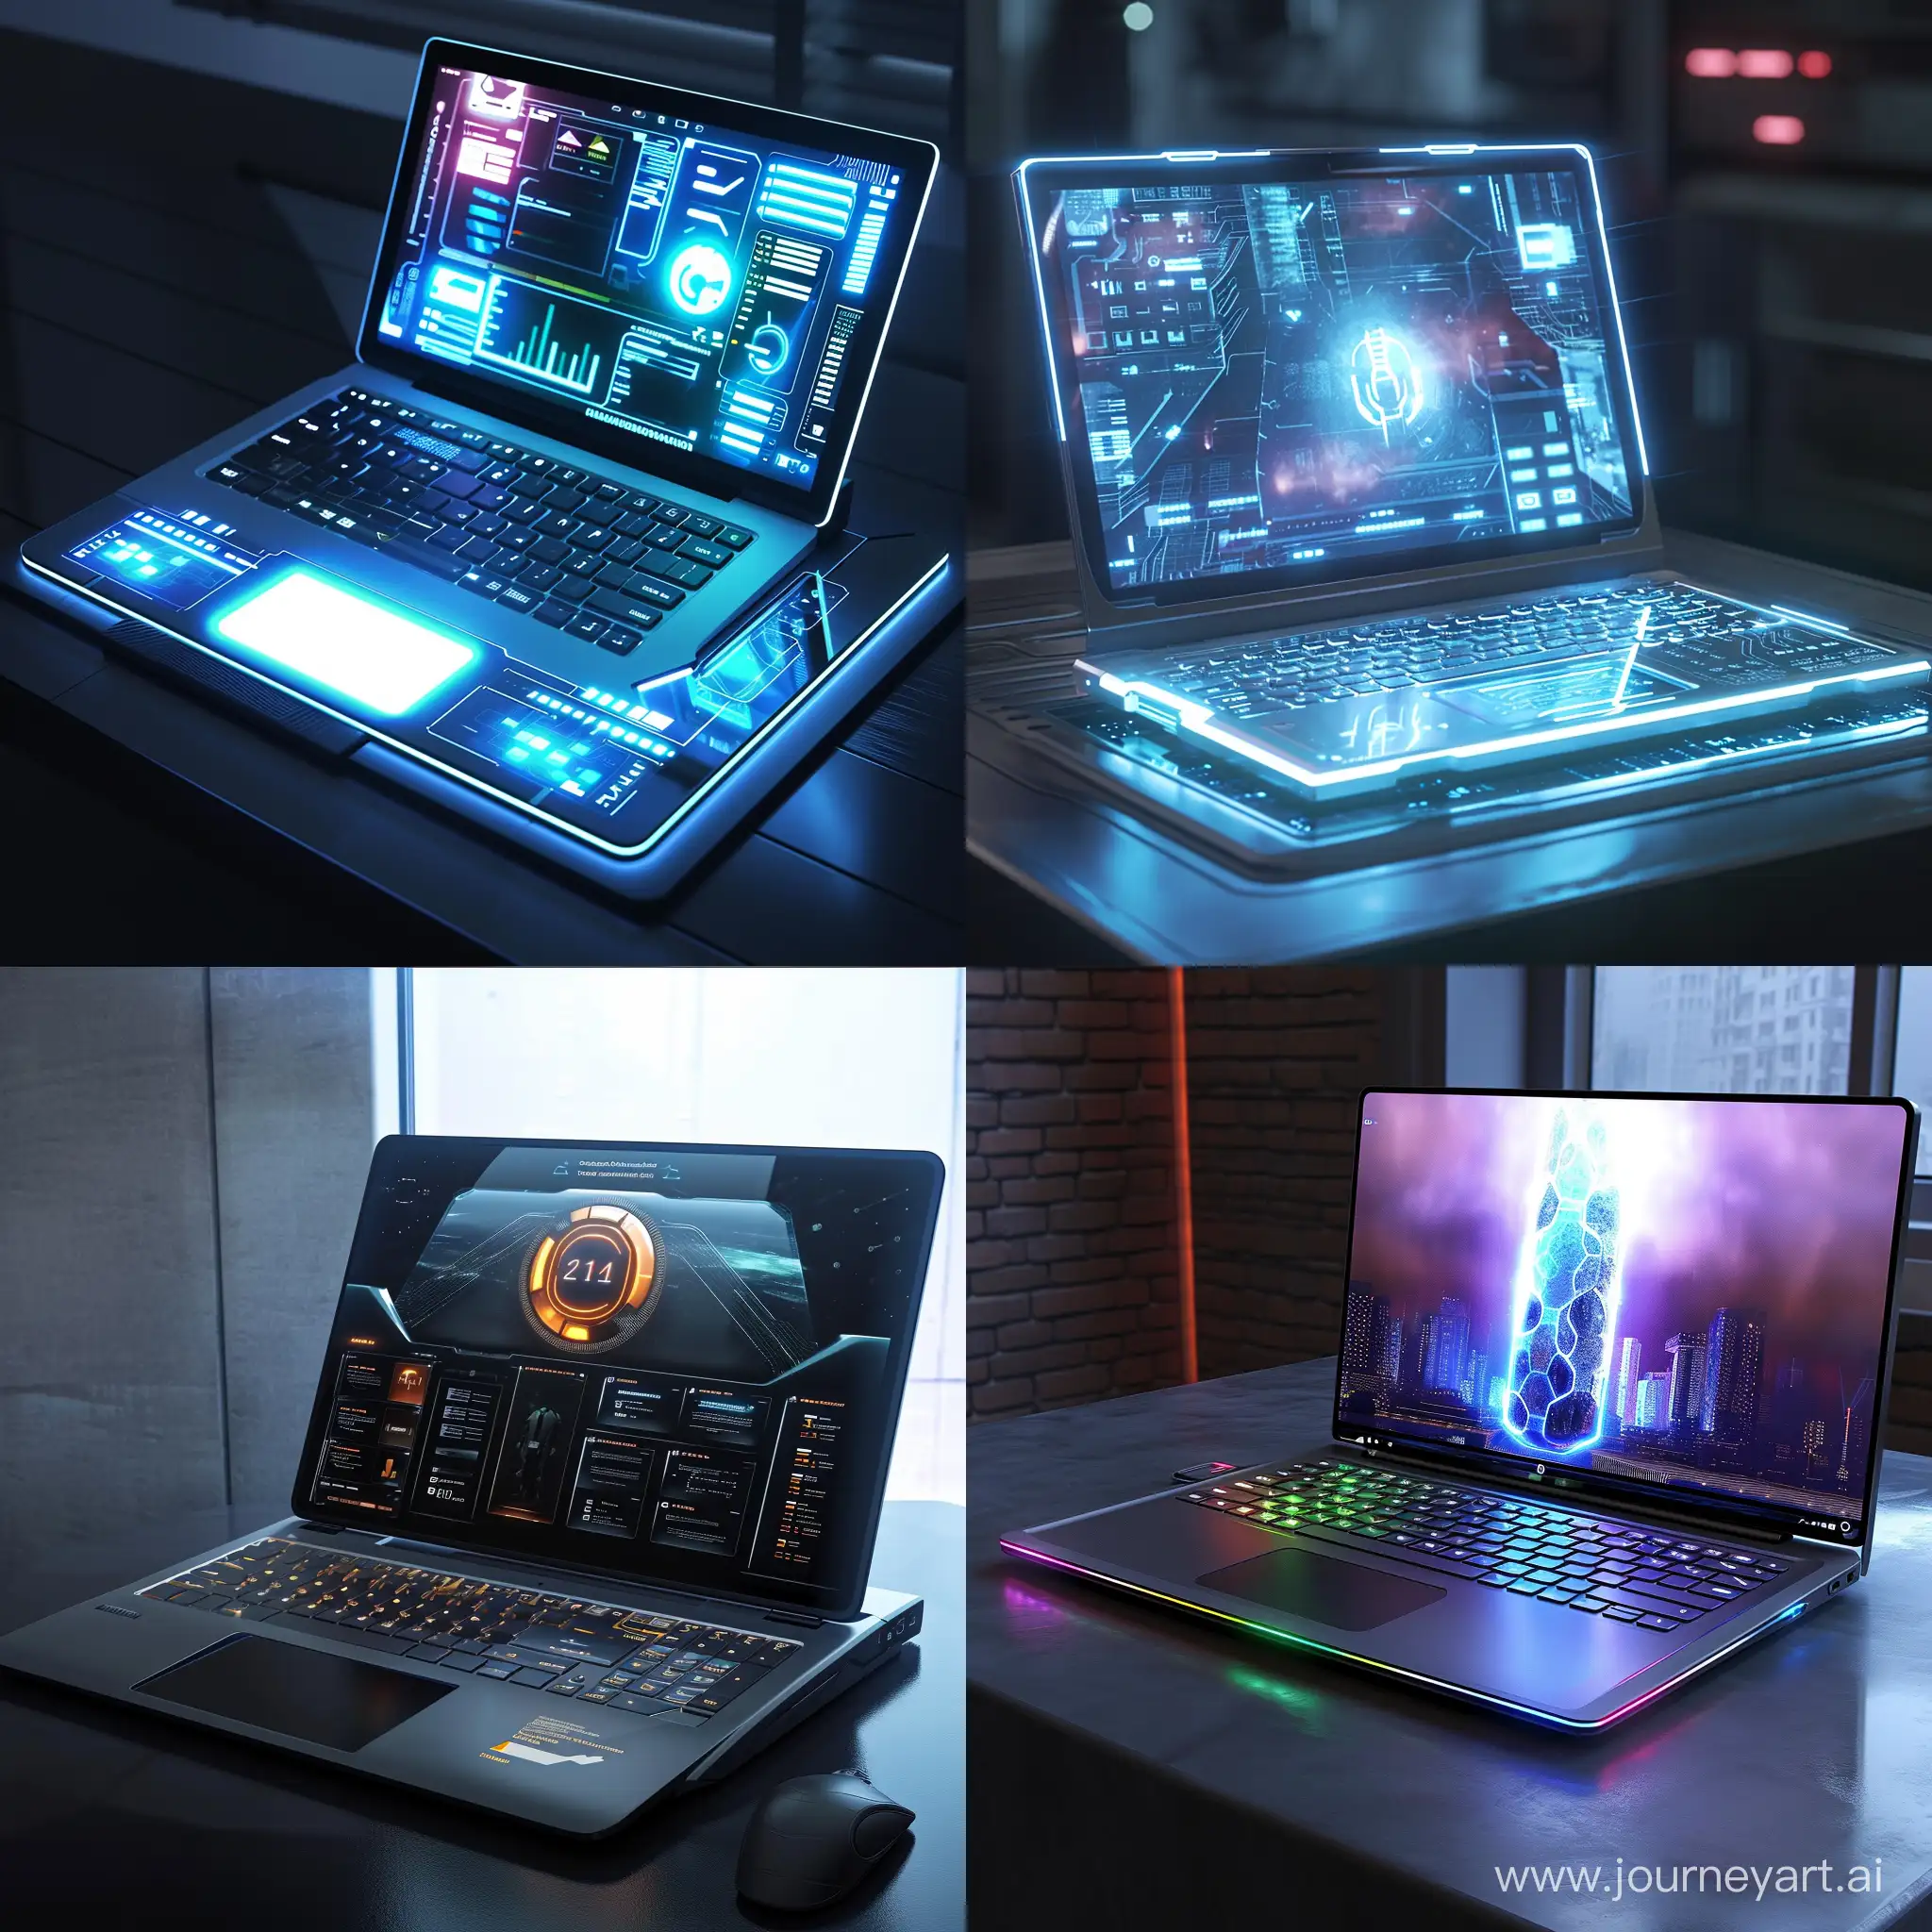 Futuristic-Smart-Laptop-in-2020s-Art-CuttingEdge-Technology-on-ArtStation-and-DeviantArt